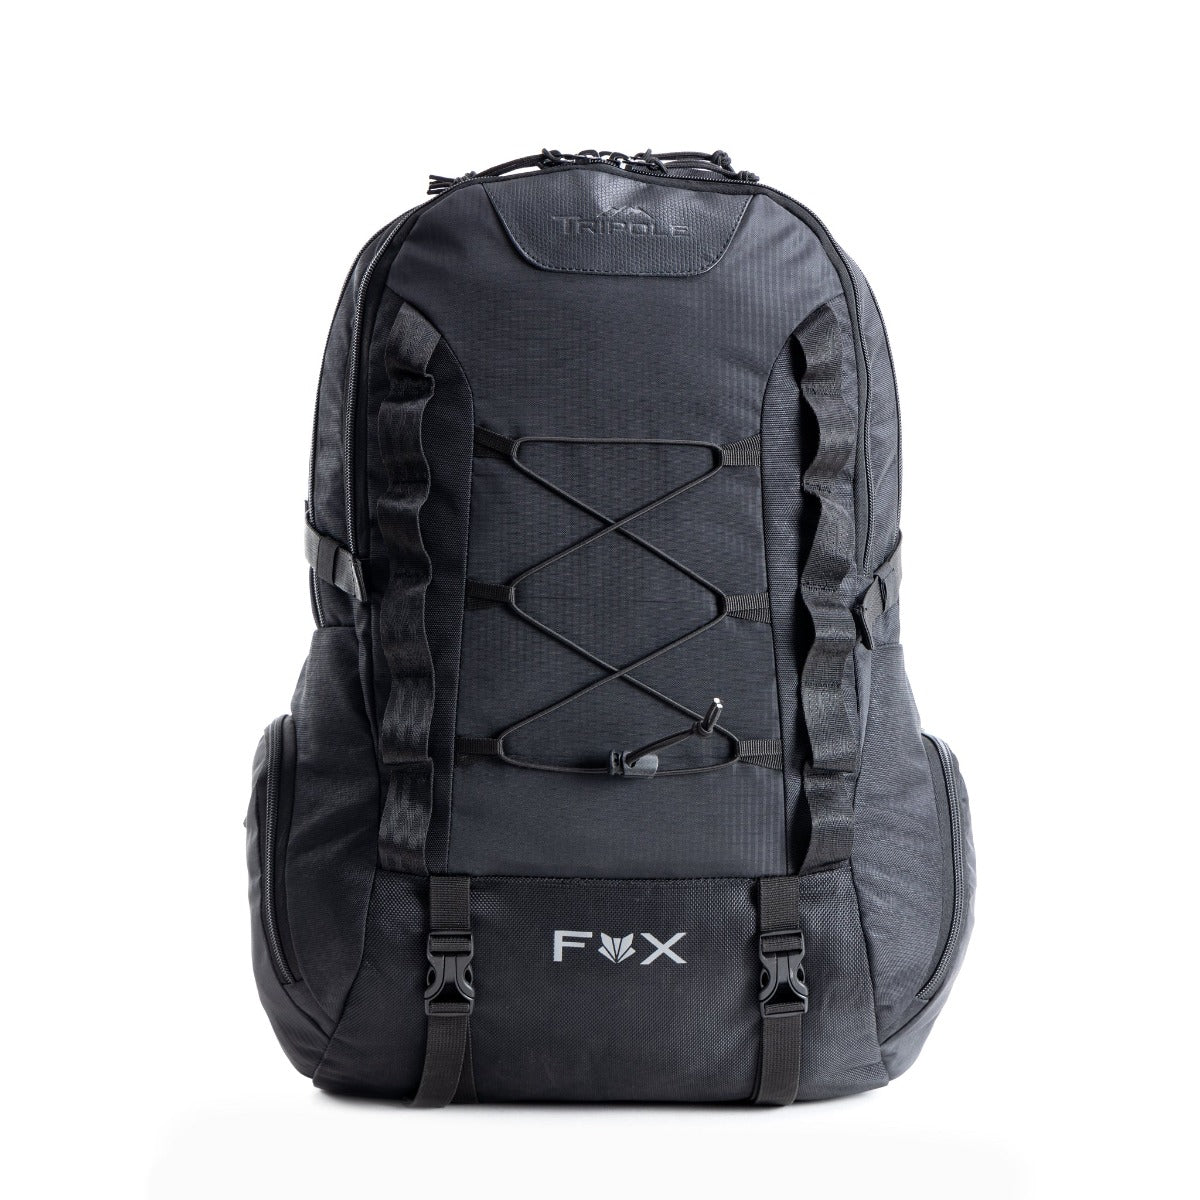 Fox Internal Frame Laptop Backpack - 40 Litres 1